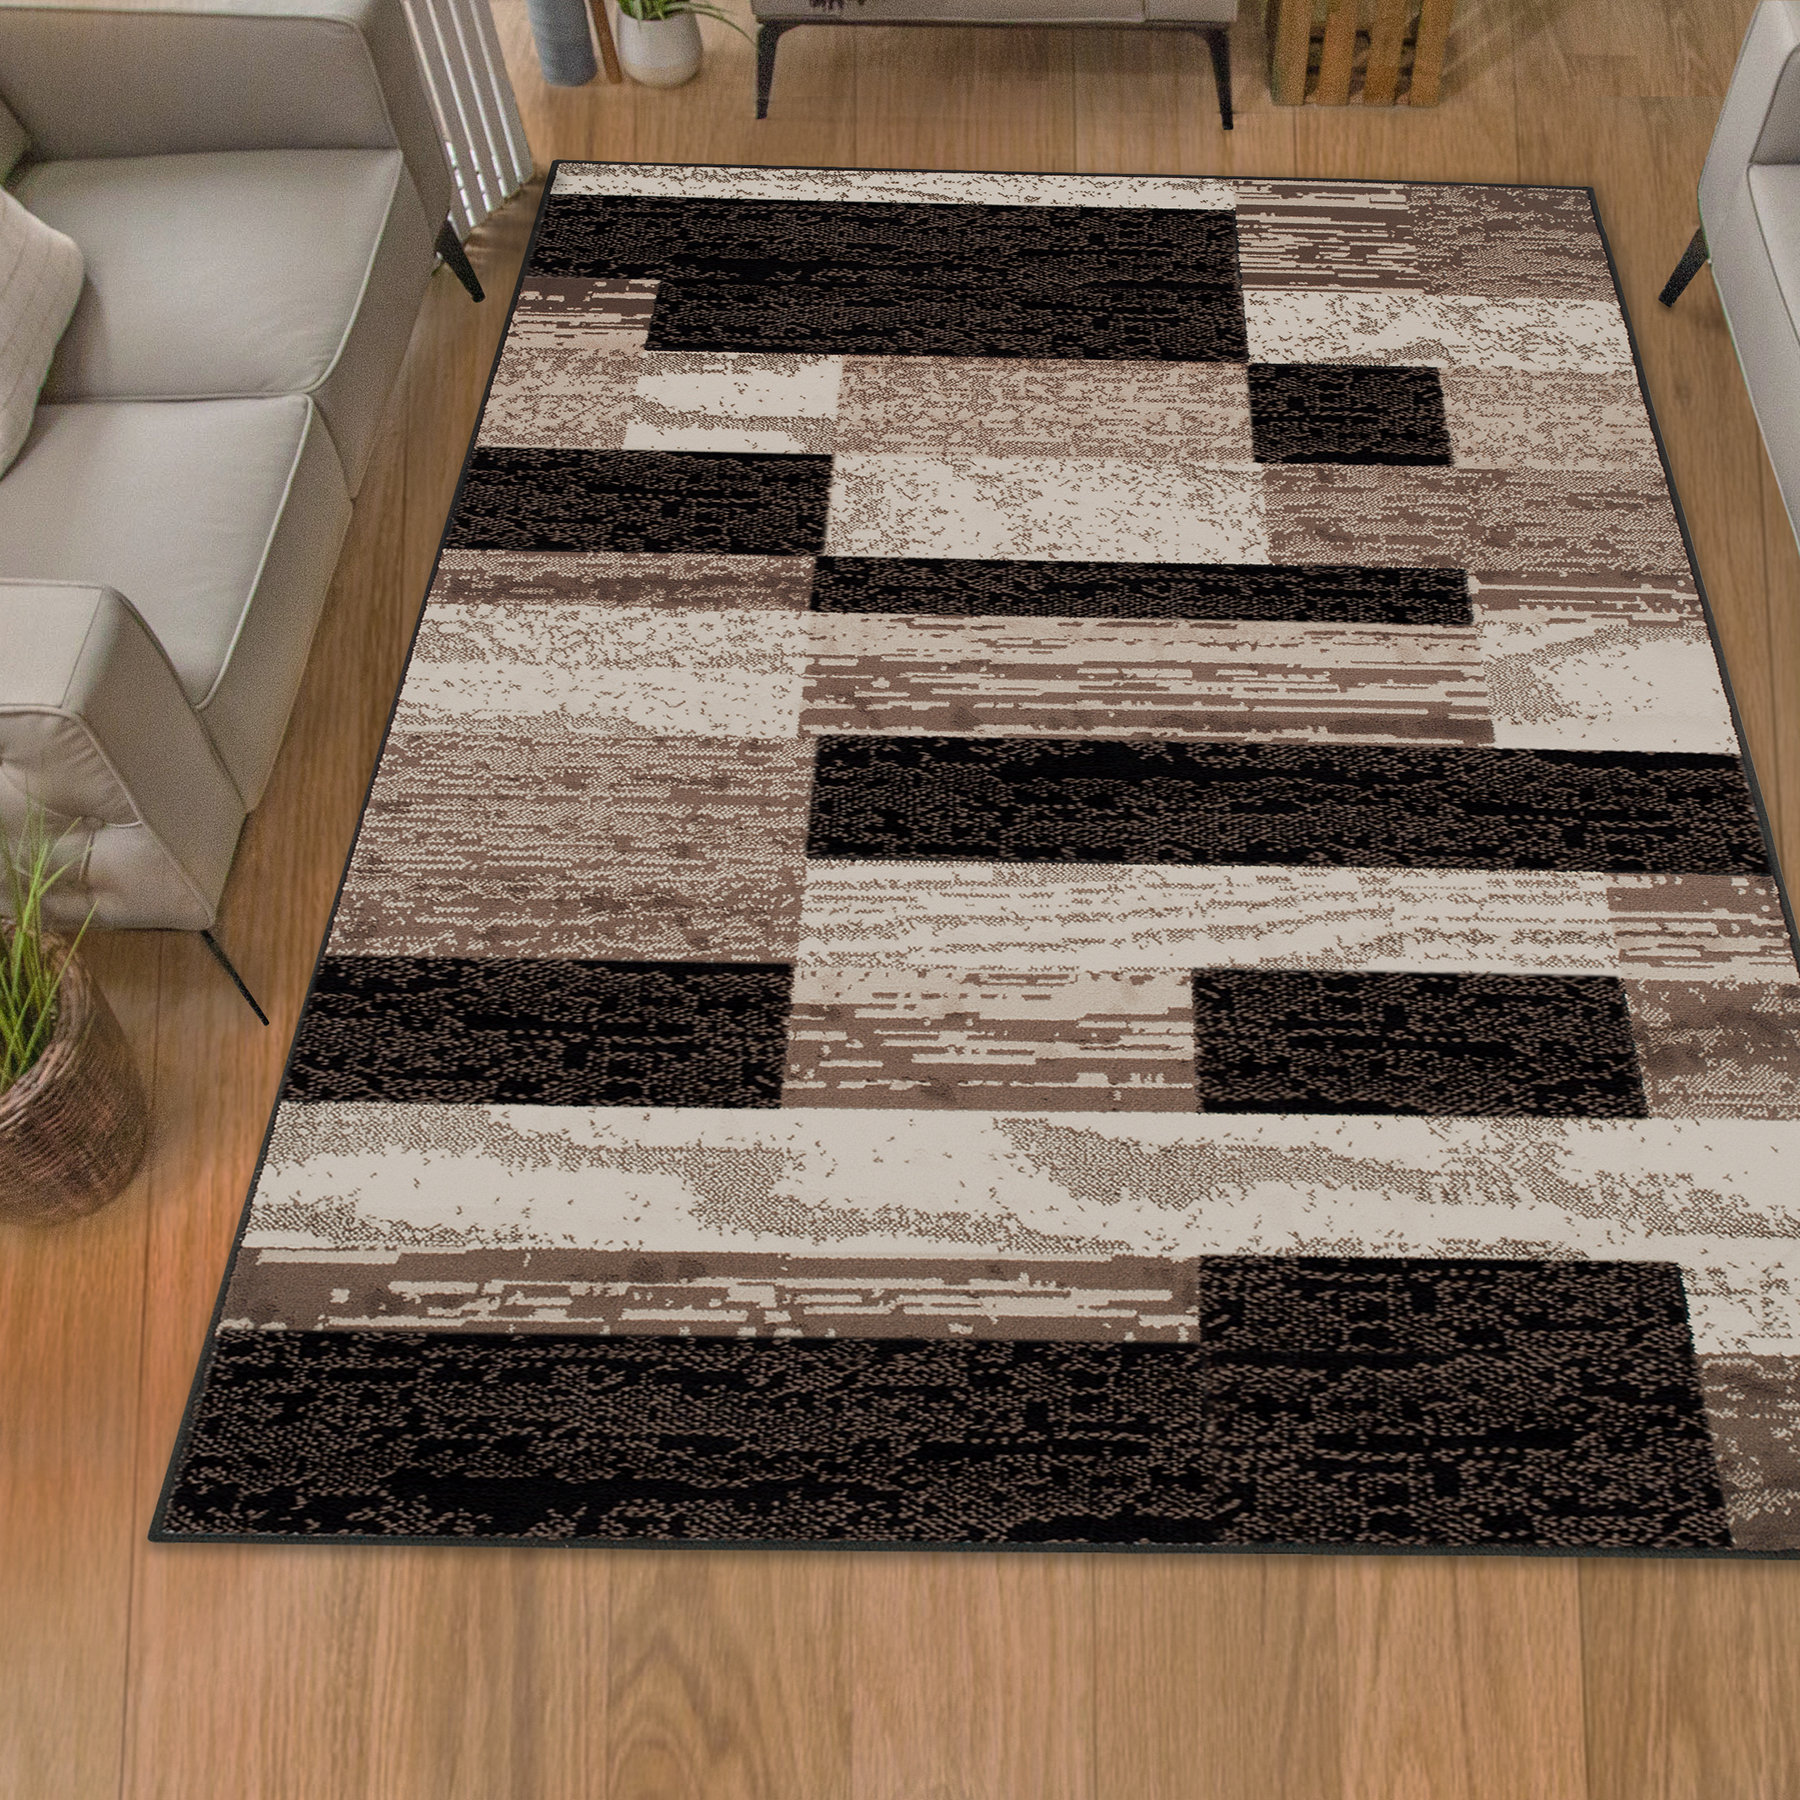 Unique Style Designer Carpet Grey Cream Brown Chequered Living Room Bedroom Rug 